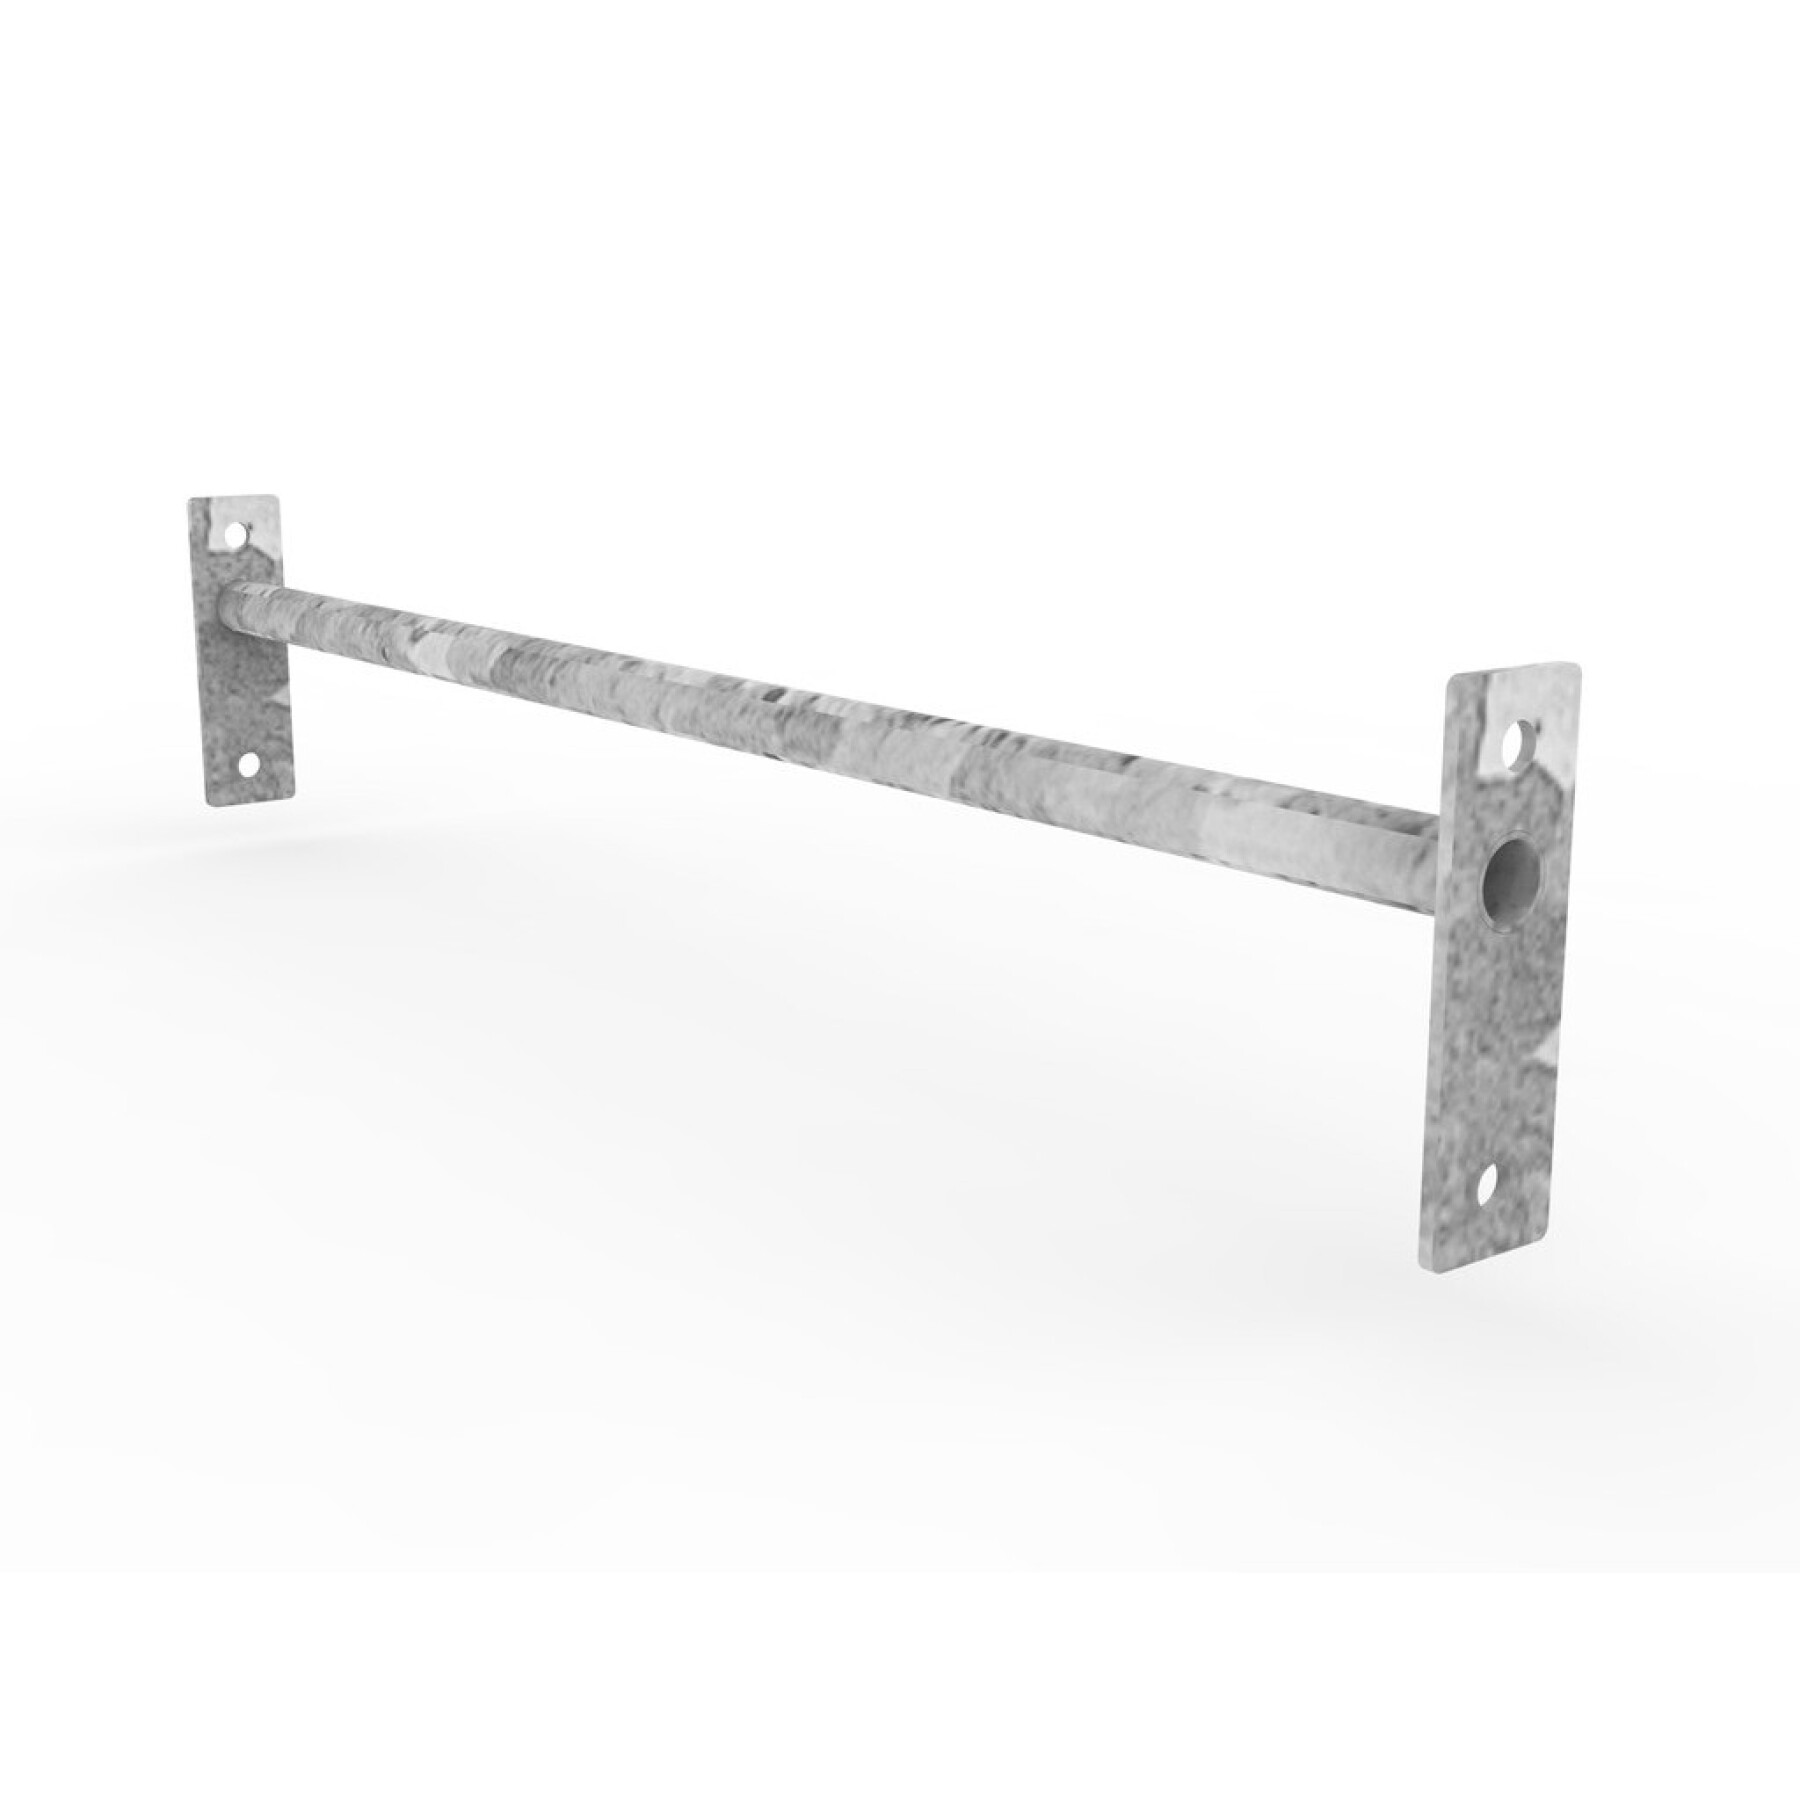 Drawbar - simple - galvanized Fit & Rack